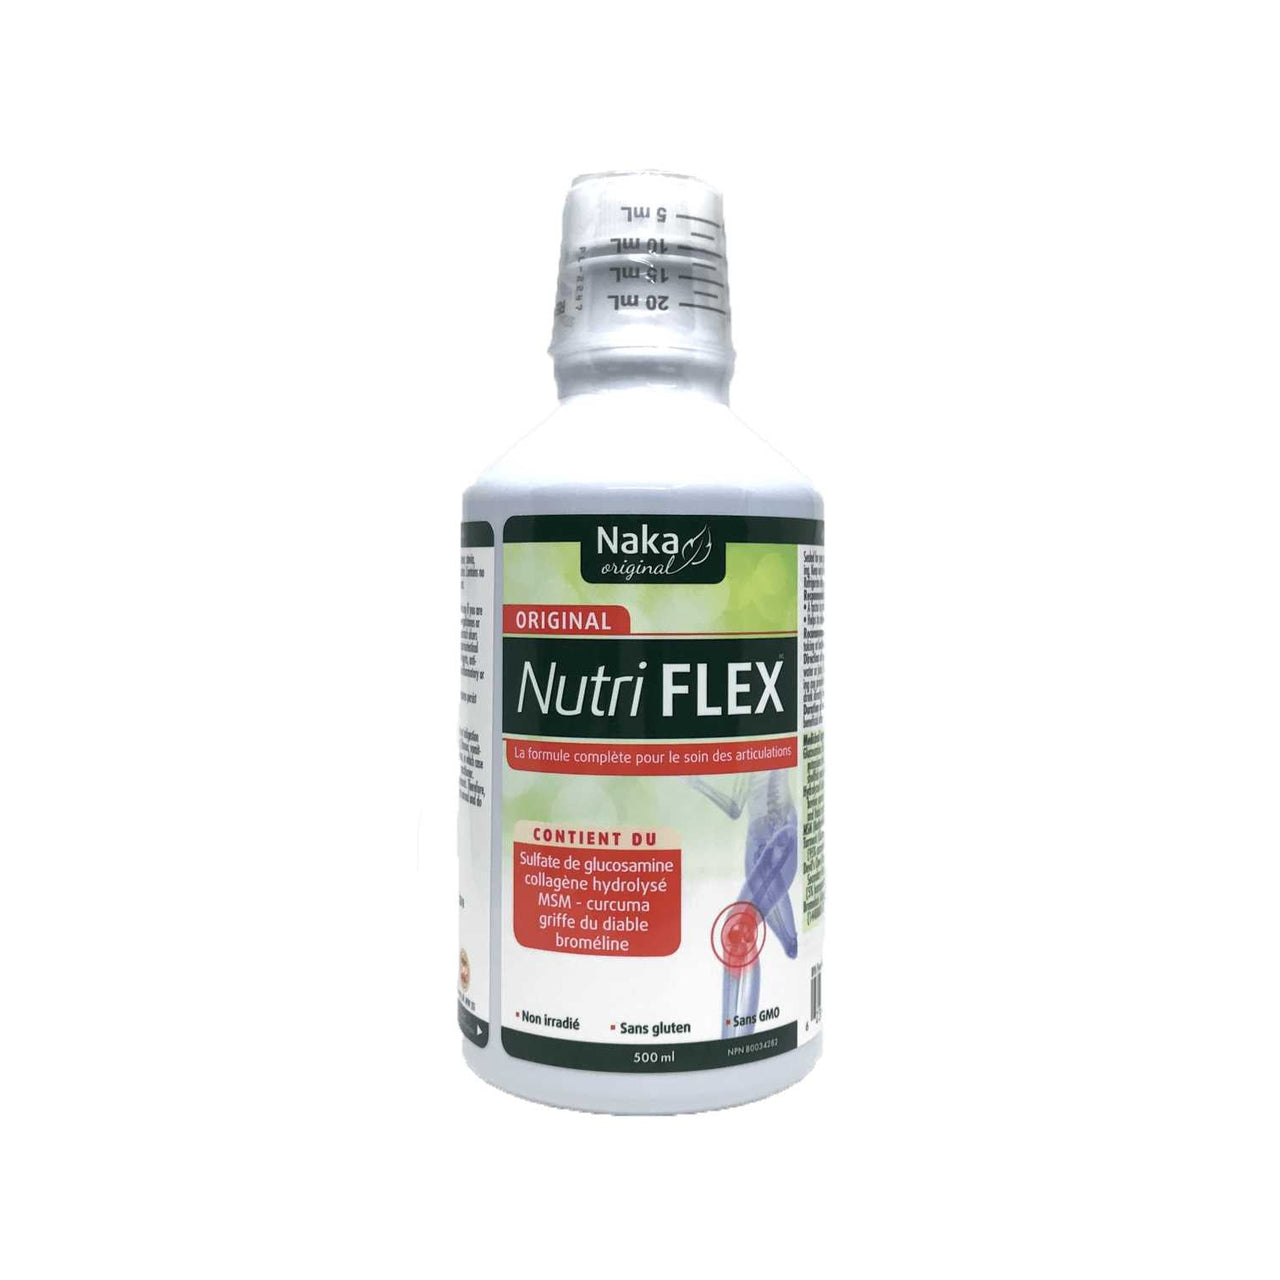 Naka Nutri Flex 500mL, The Liquid Original Joint Formula - Nutrition Plus